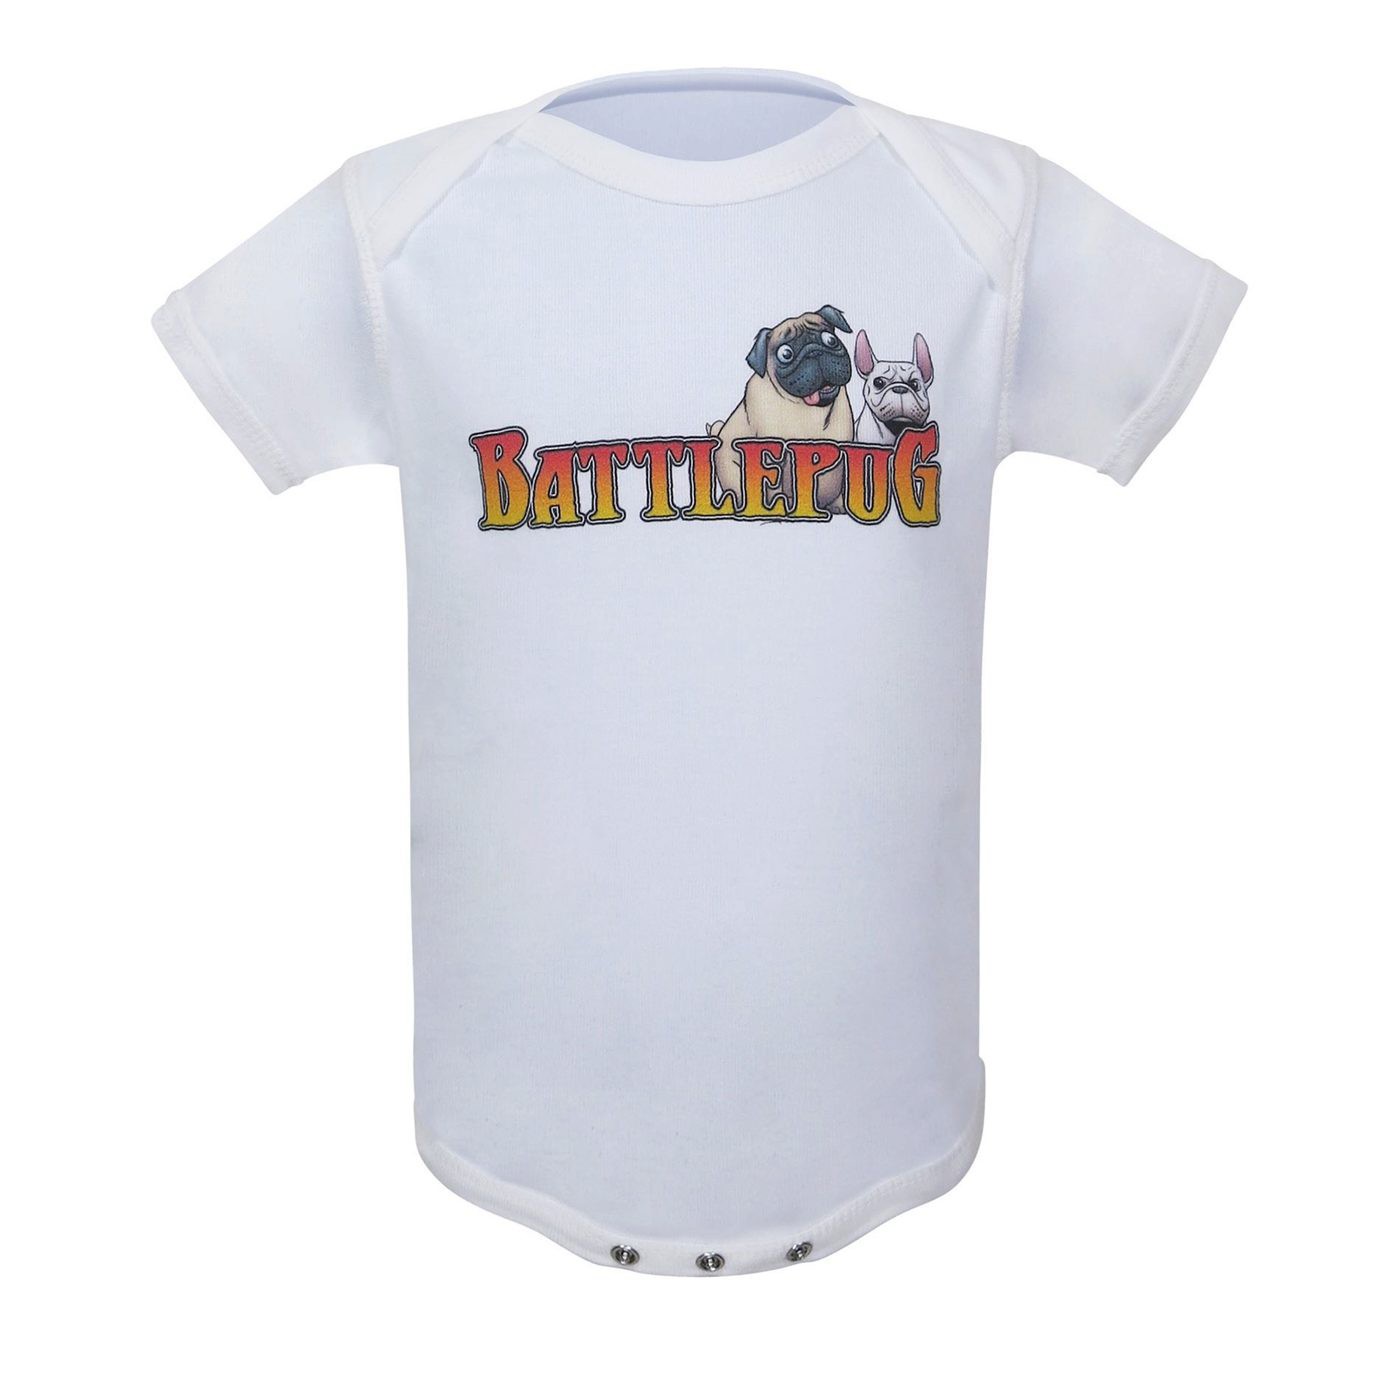 BattlePug White Infant Snapsuit